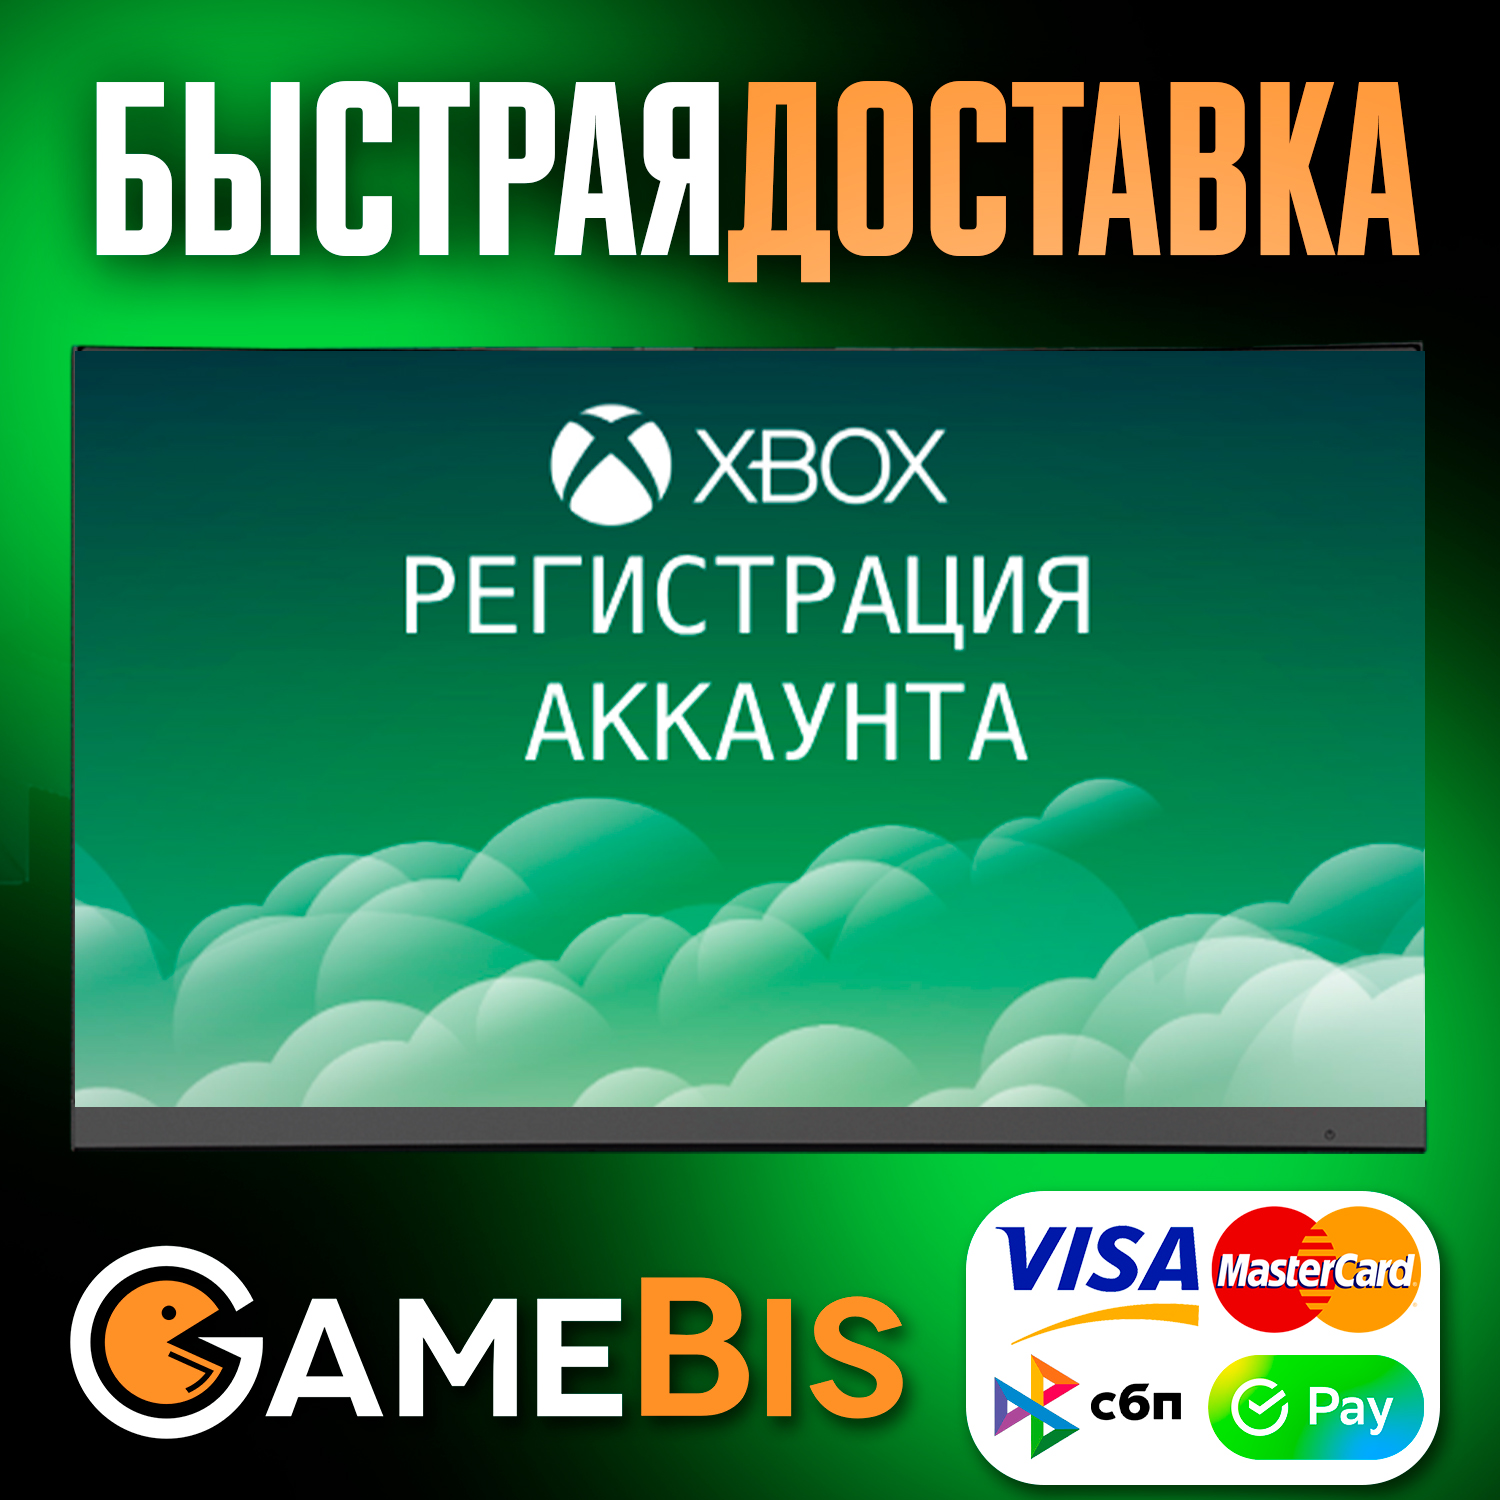 Активировать подписку xbox game. Xbox Registration.